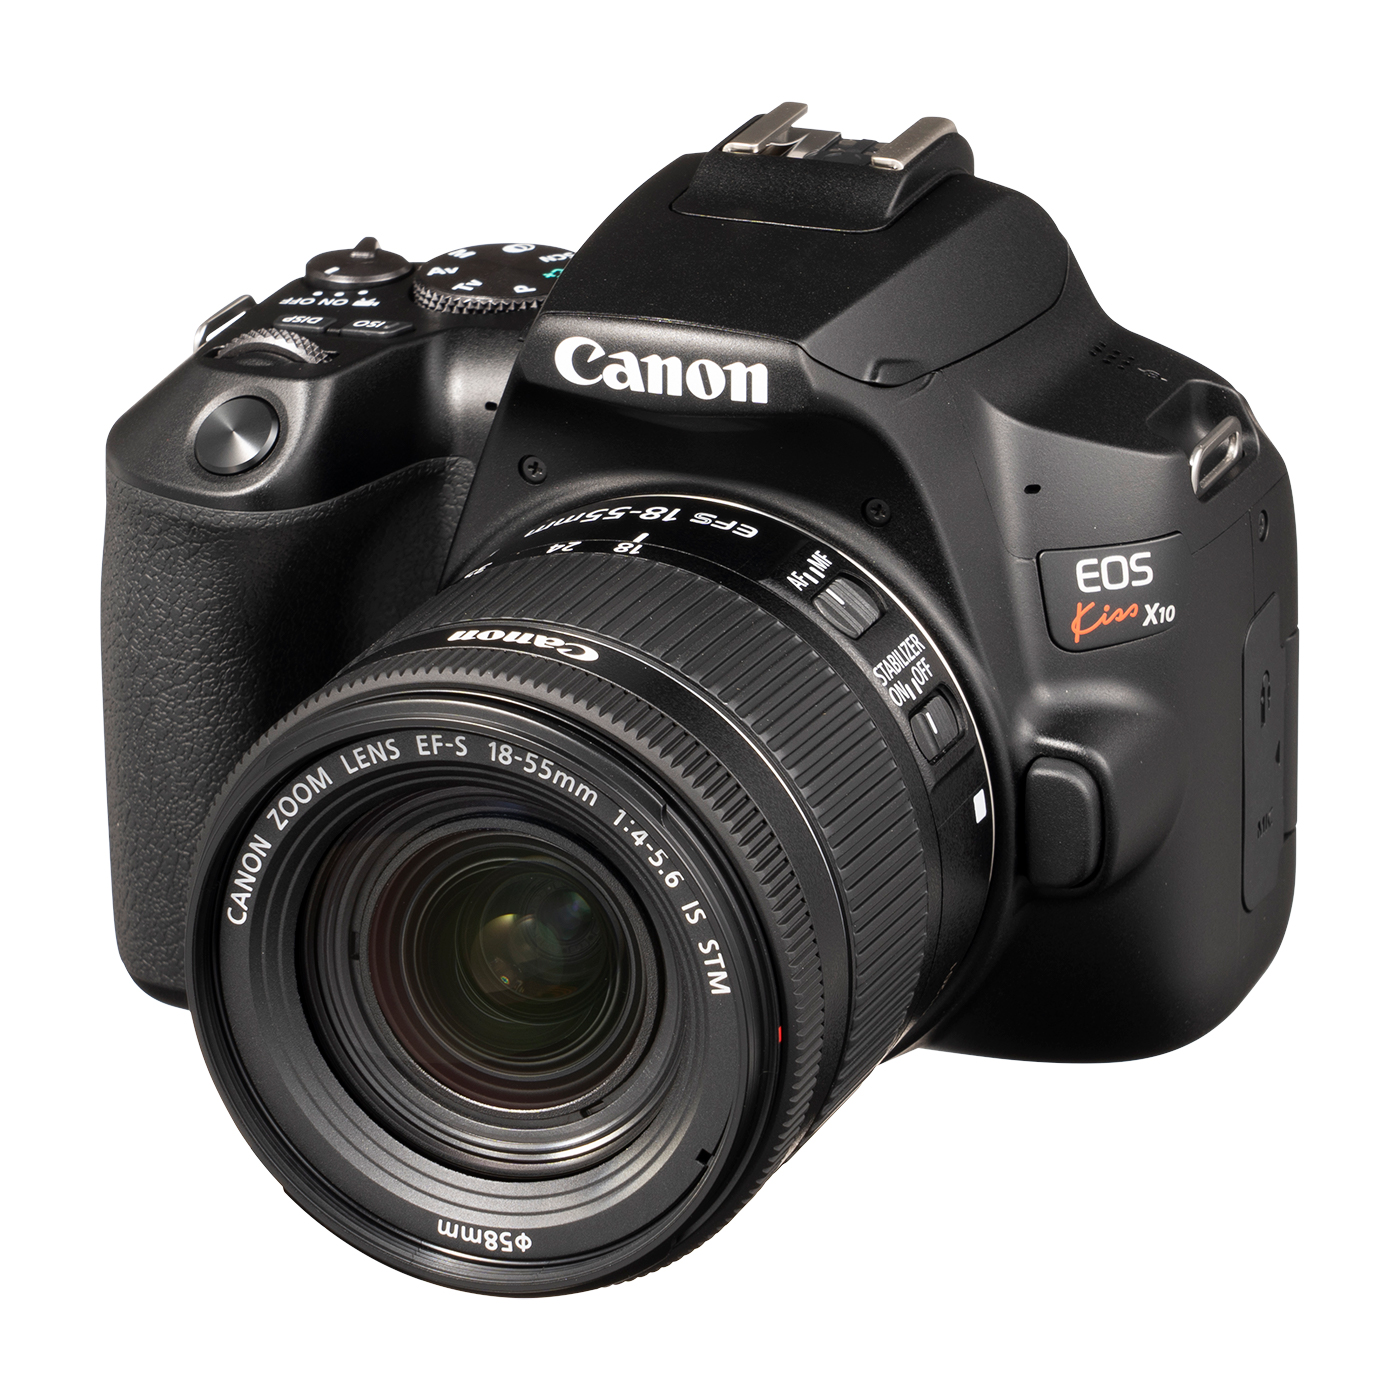 Canon デジタル一眼レフカメラ EOS Kiss X10 標準ズームキット ブラック KISSX10BK-1855ISSTMLK - 2